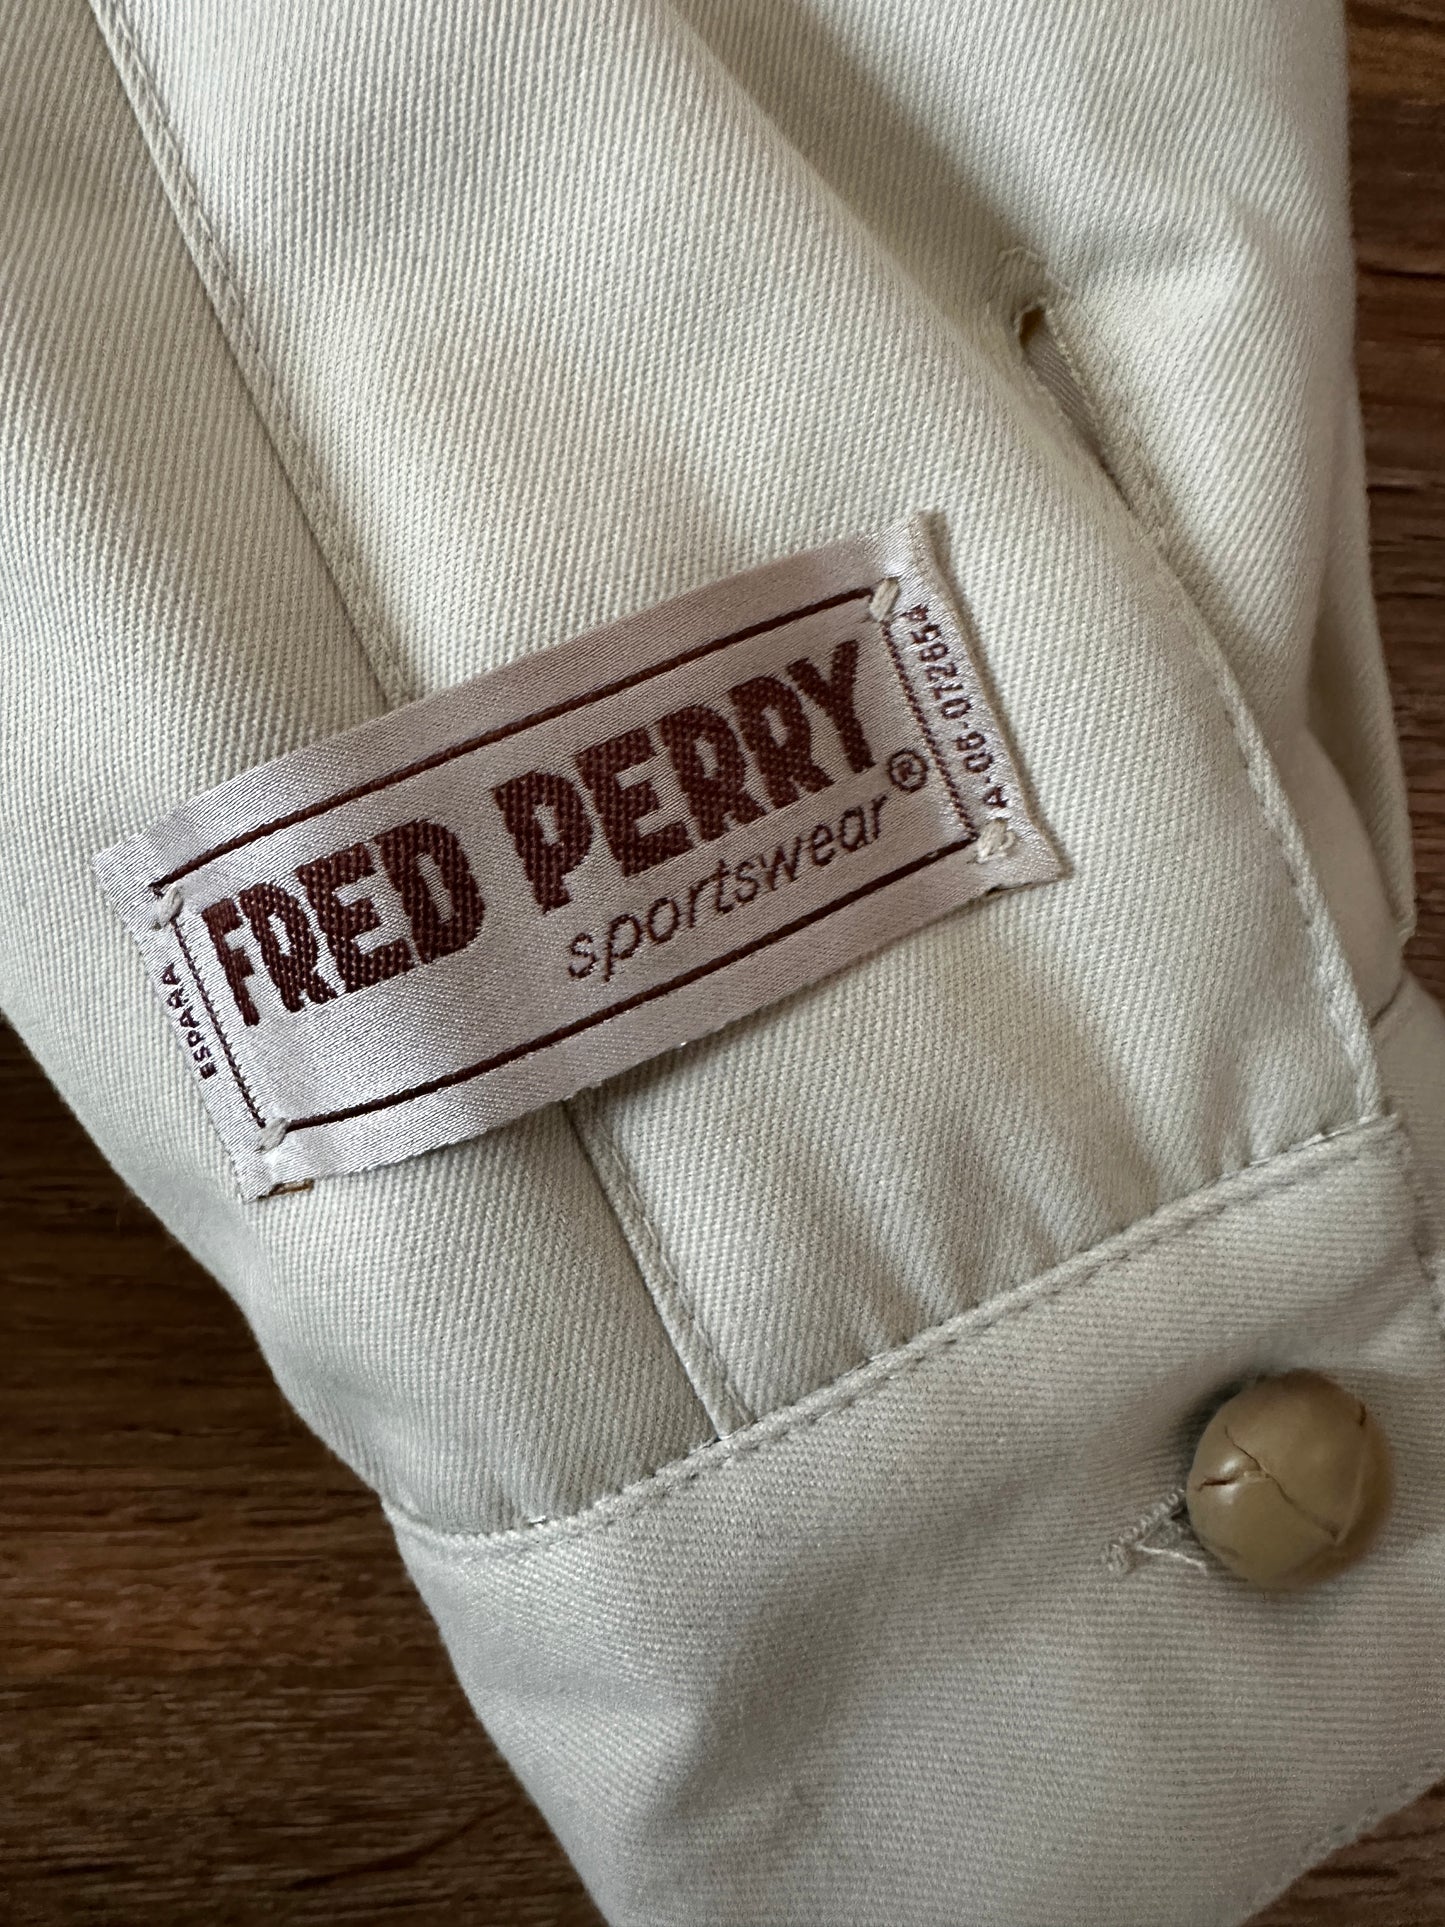 Fred Perry Vintage 80s Anorak Light-beige - Deadstoock - 54 / L - Made in Spain